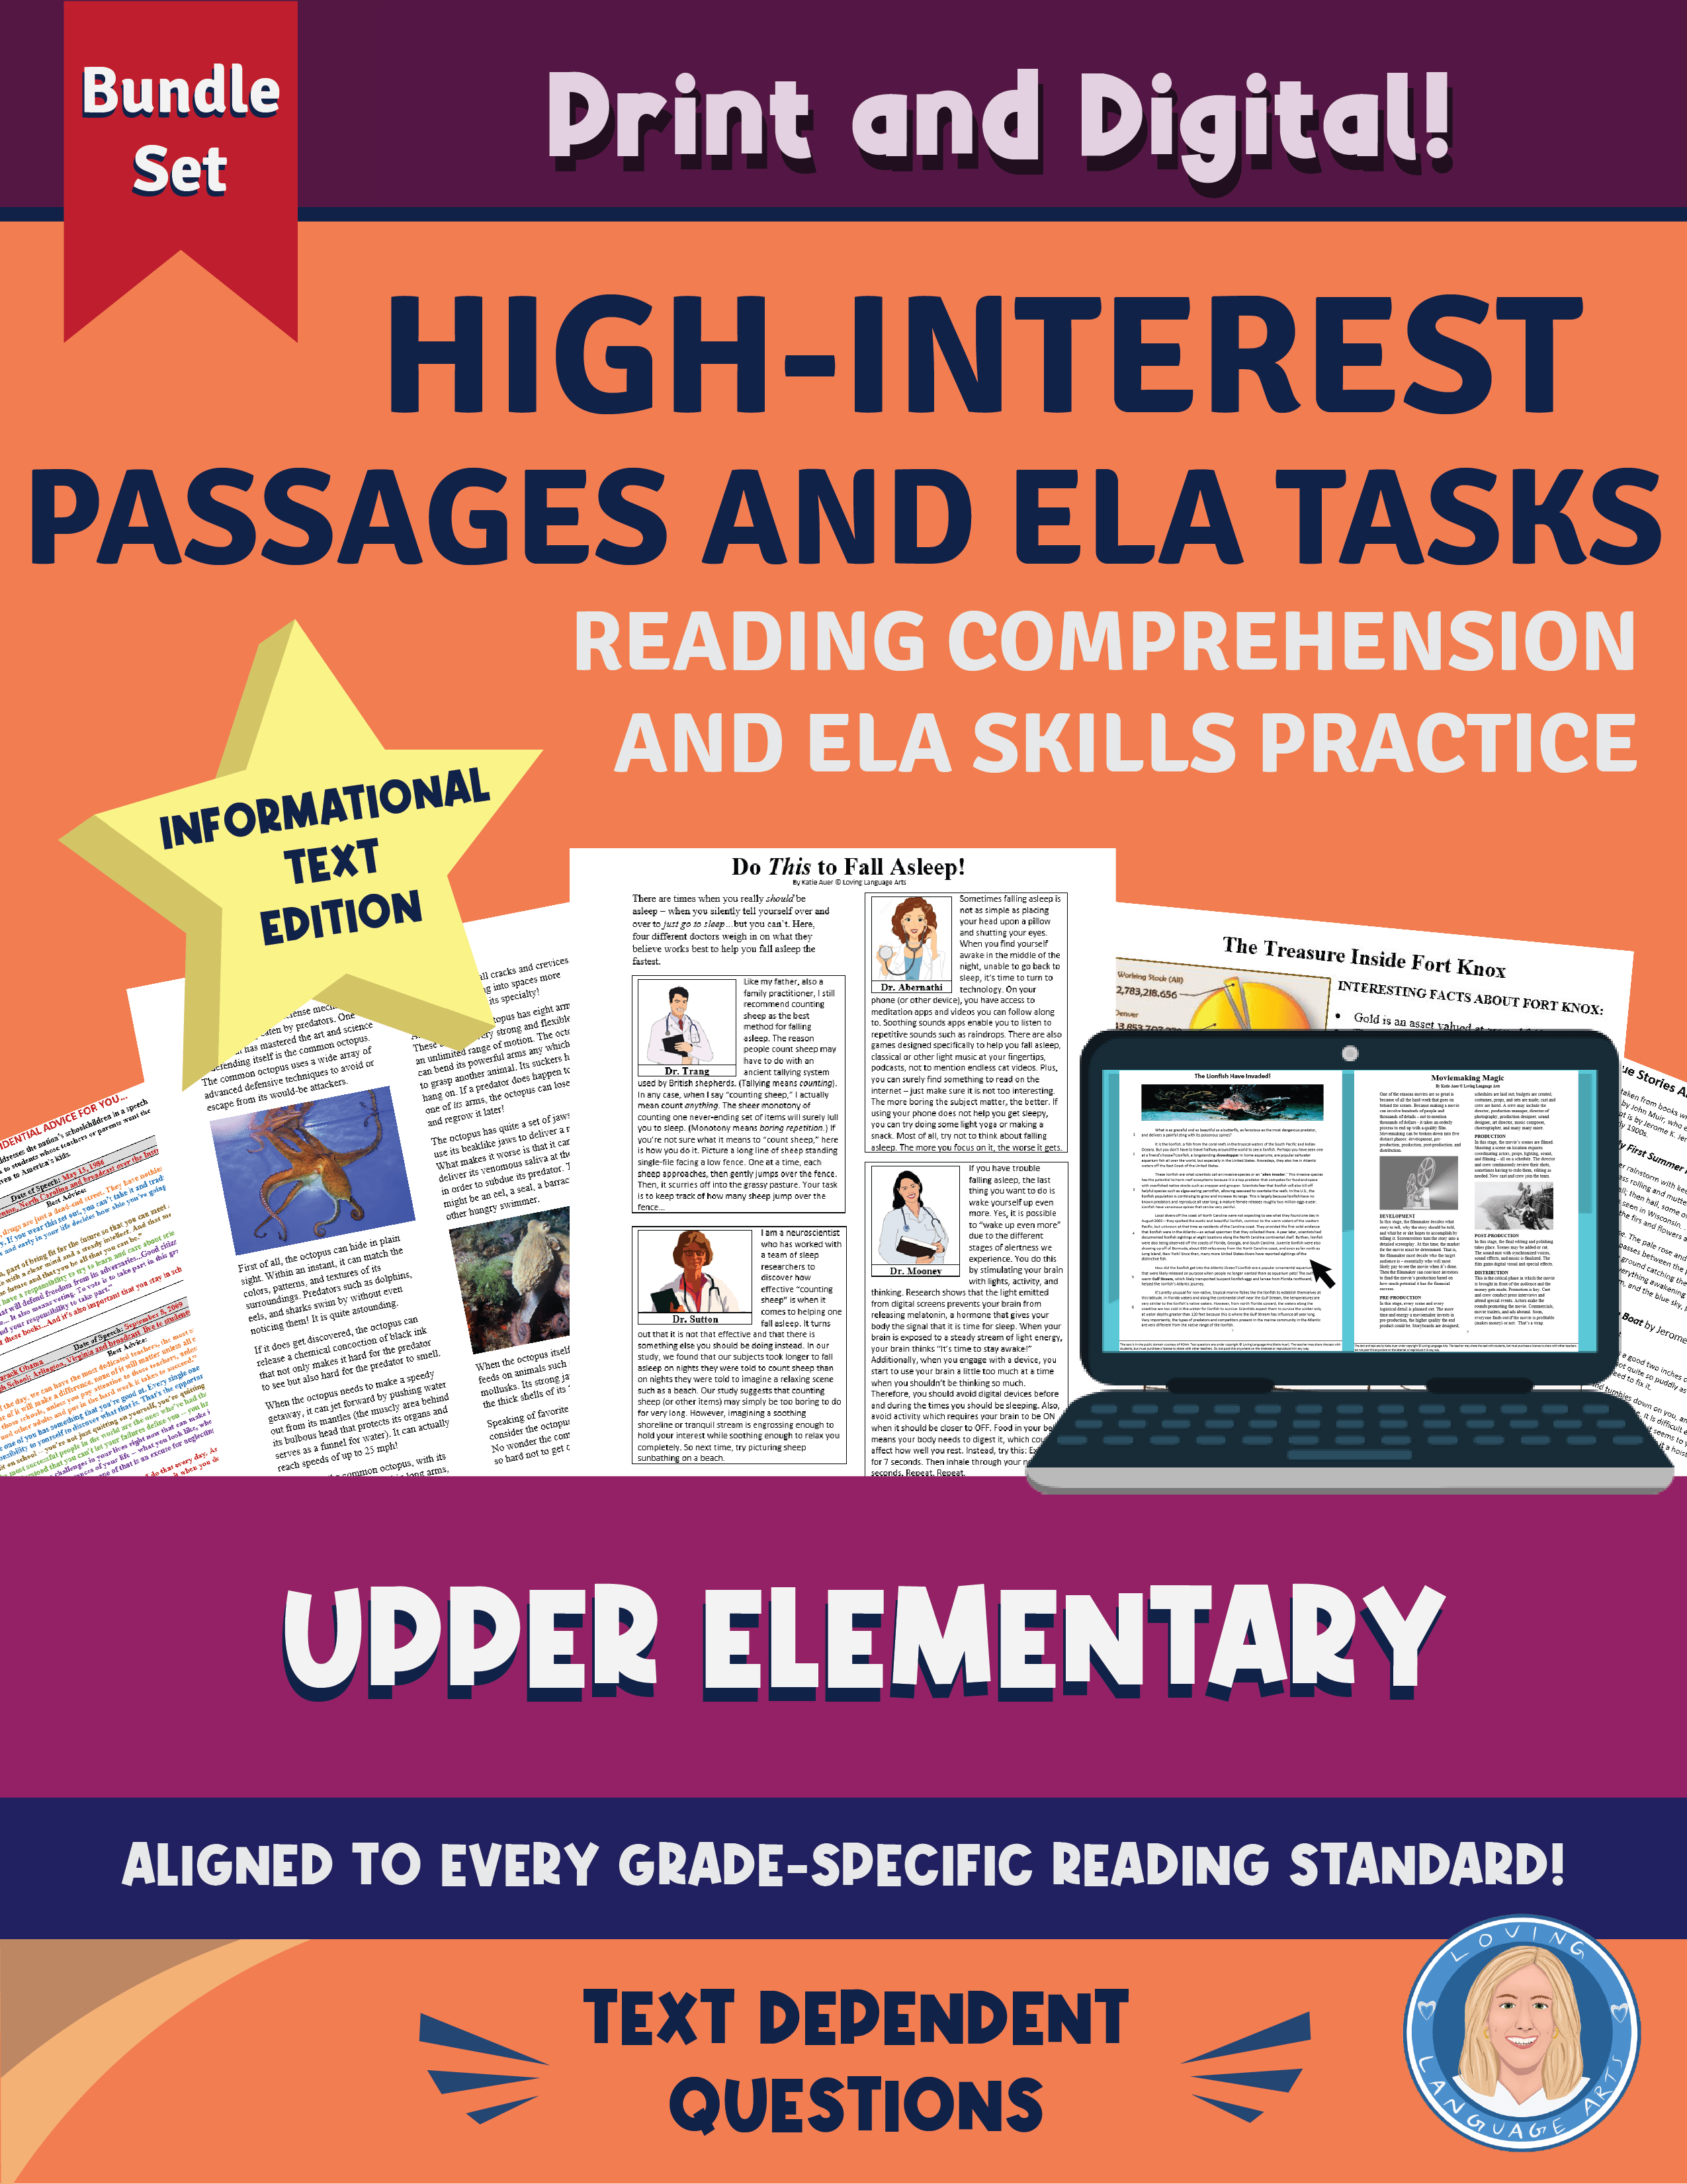 4th-5th grade language arts workbook - High-interest passages and tasks.